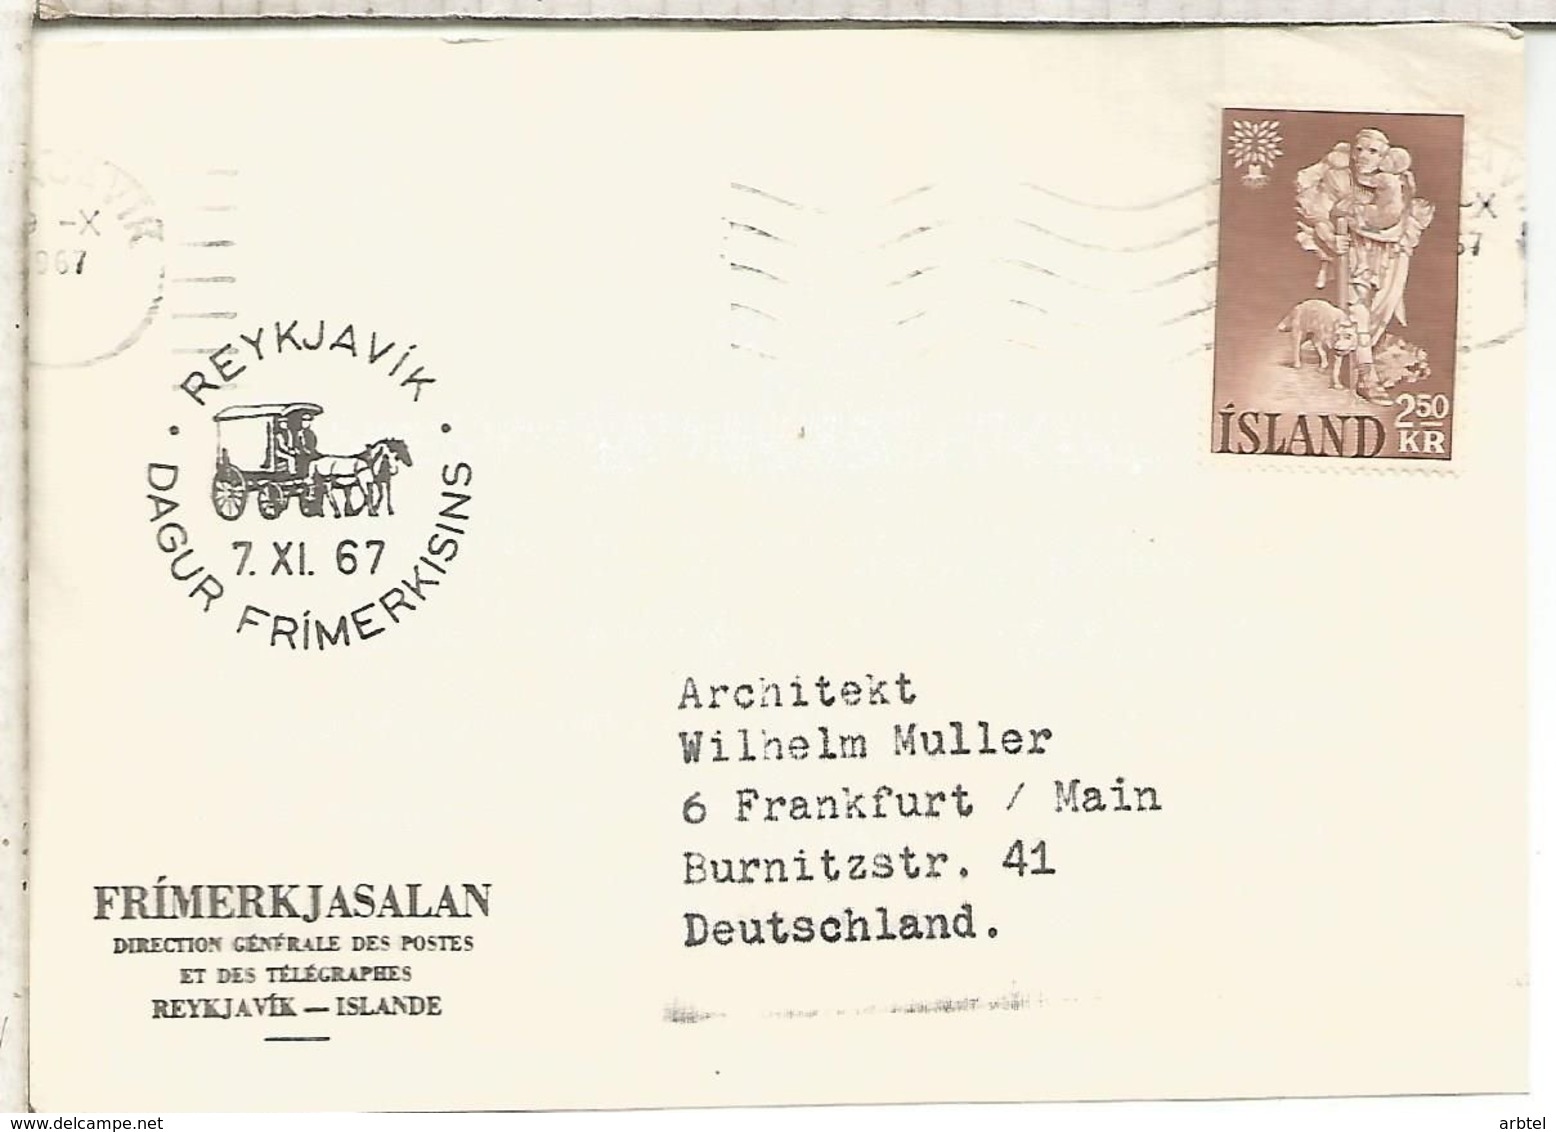 ISLANDIA ISLAND ICELAND CC 1967 MAT REYKJAVIK HANS HALS - Briefe U. Dokumente